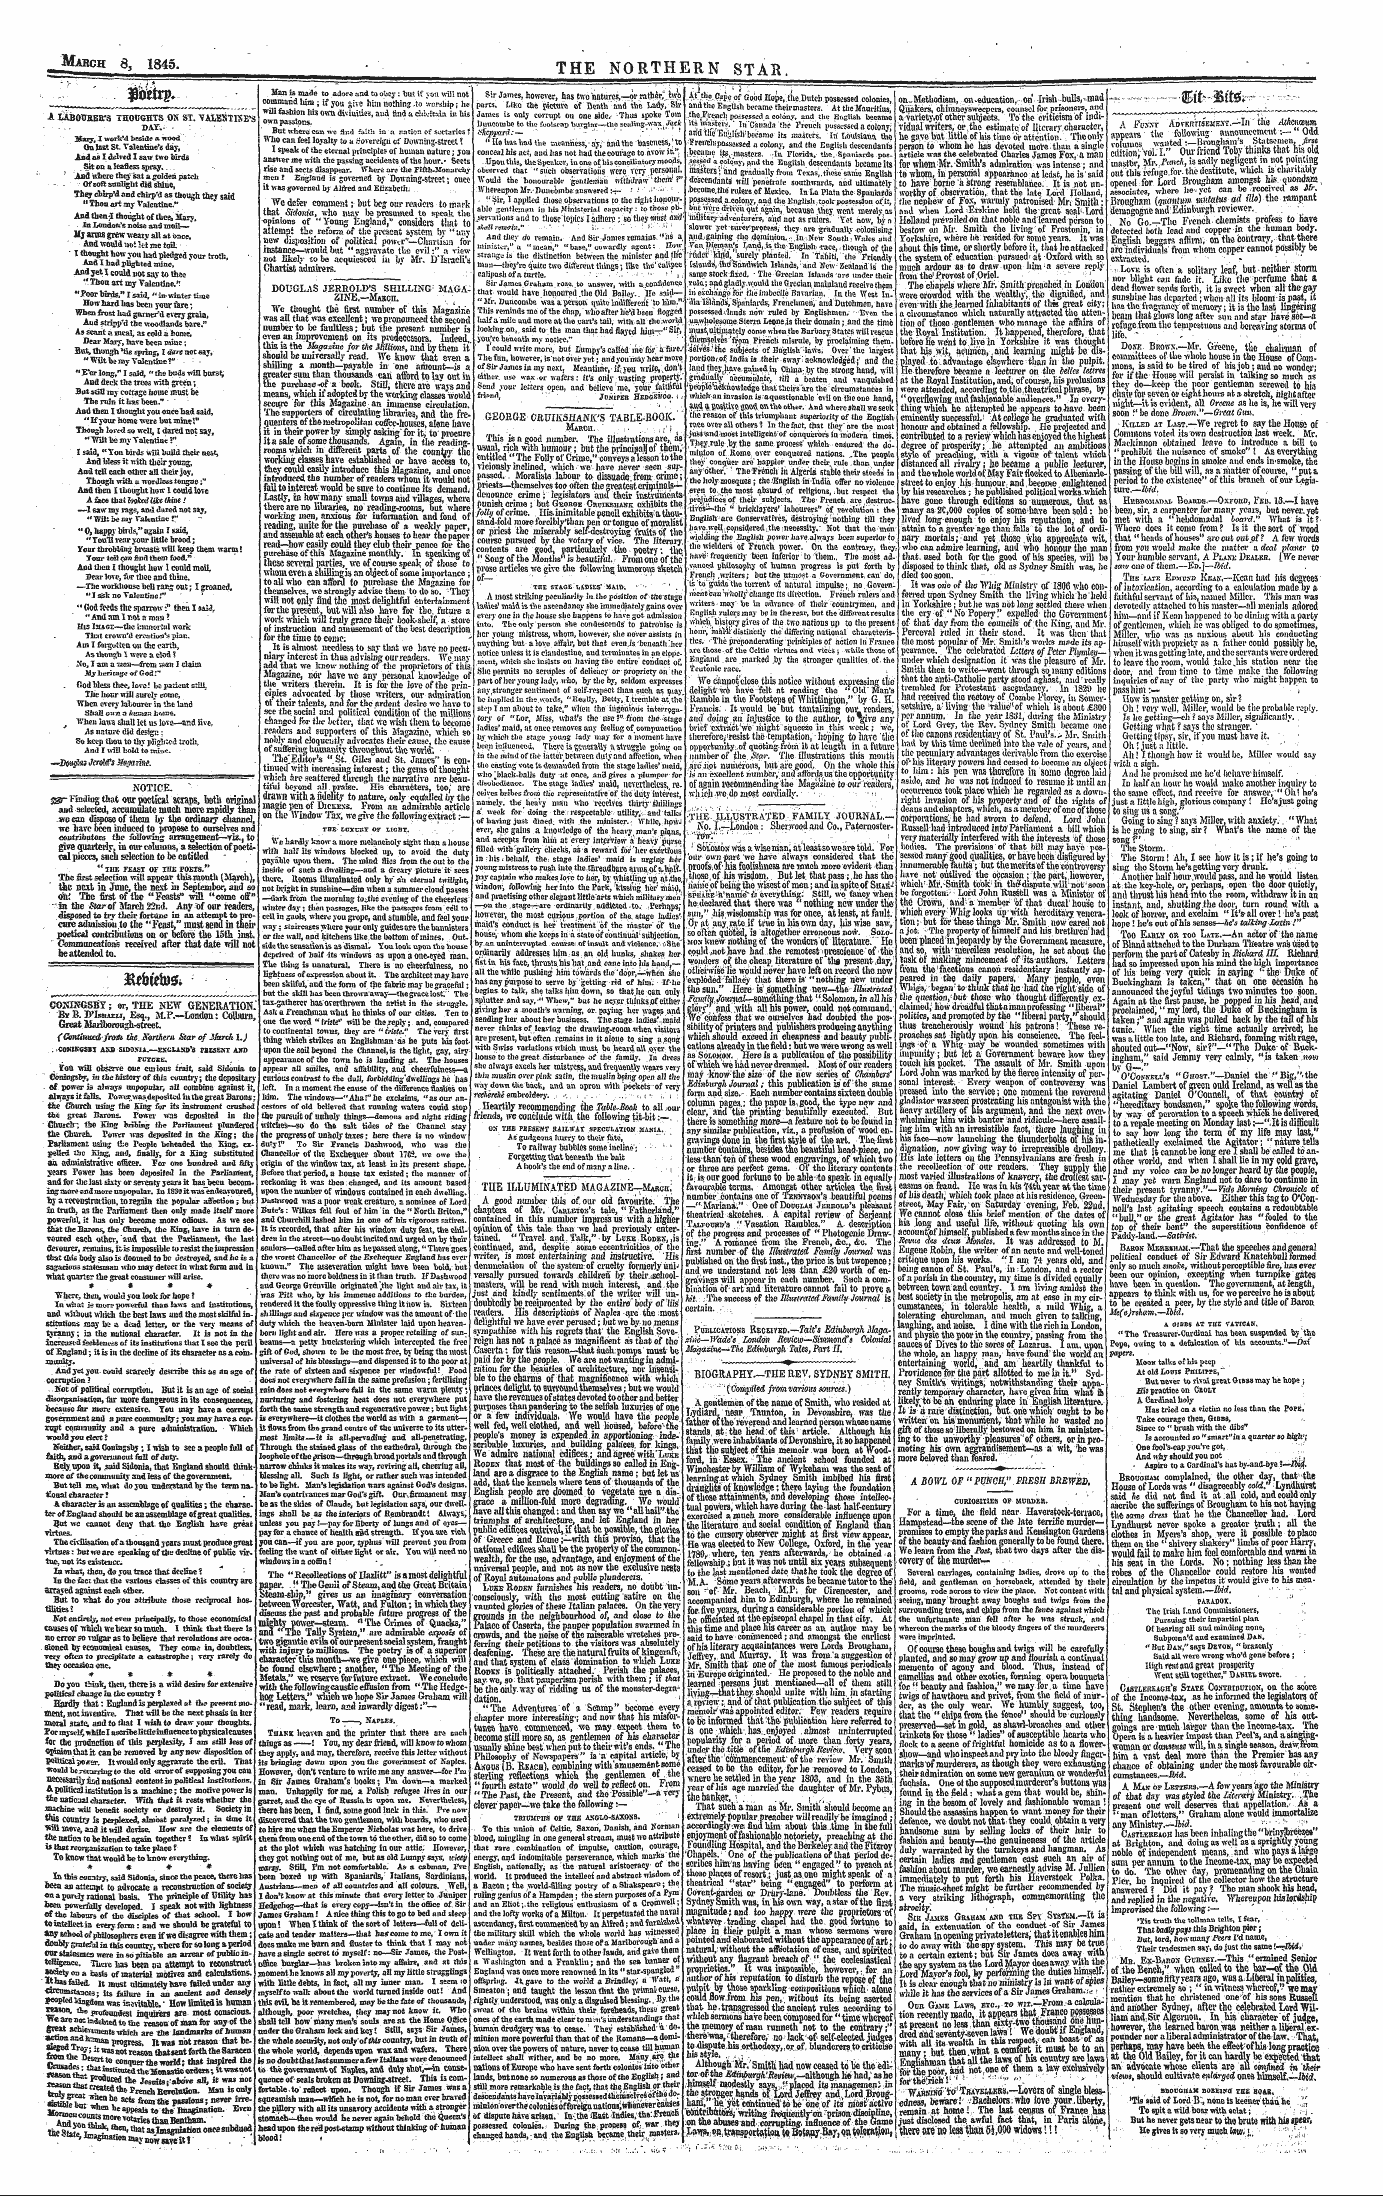 Northern Star (1837-1852): jS F Y, 3rd edition - Douglas Jerrold's Shillingmagazine.-Mabc...